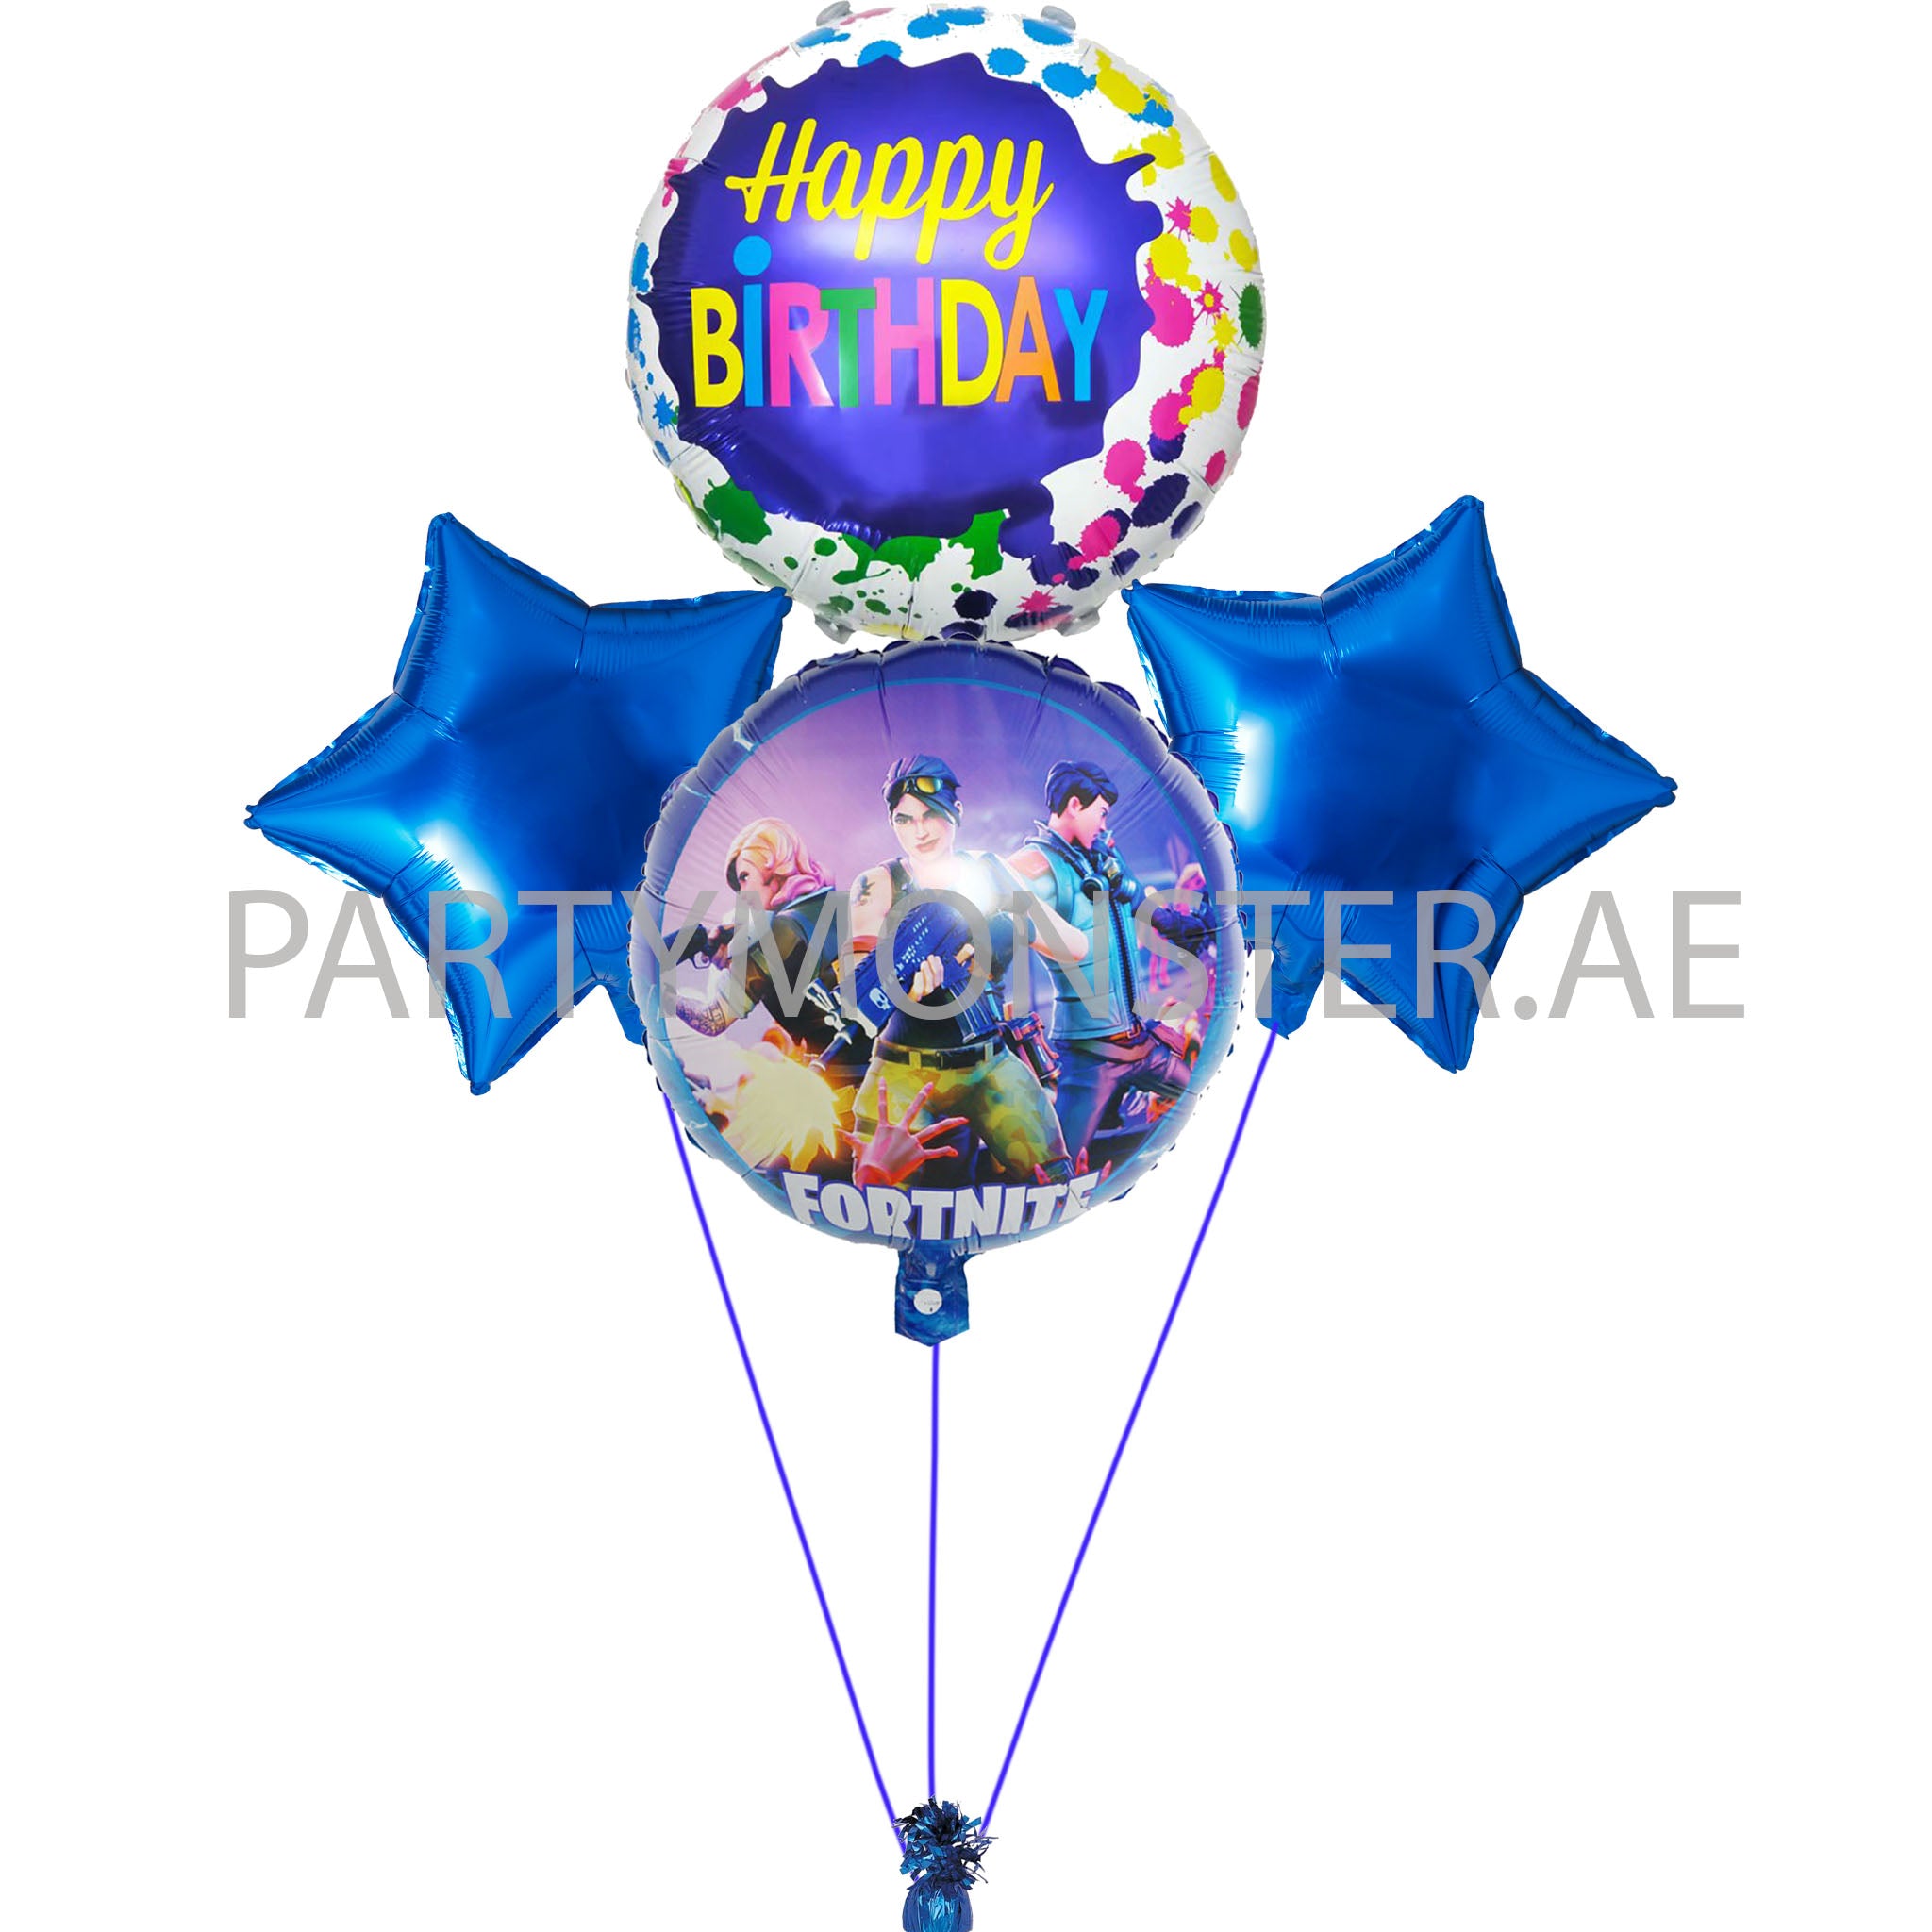 Fortnite birthday balloons bouquet - PartyMonster.ae